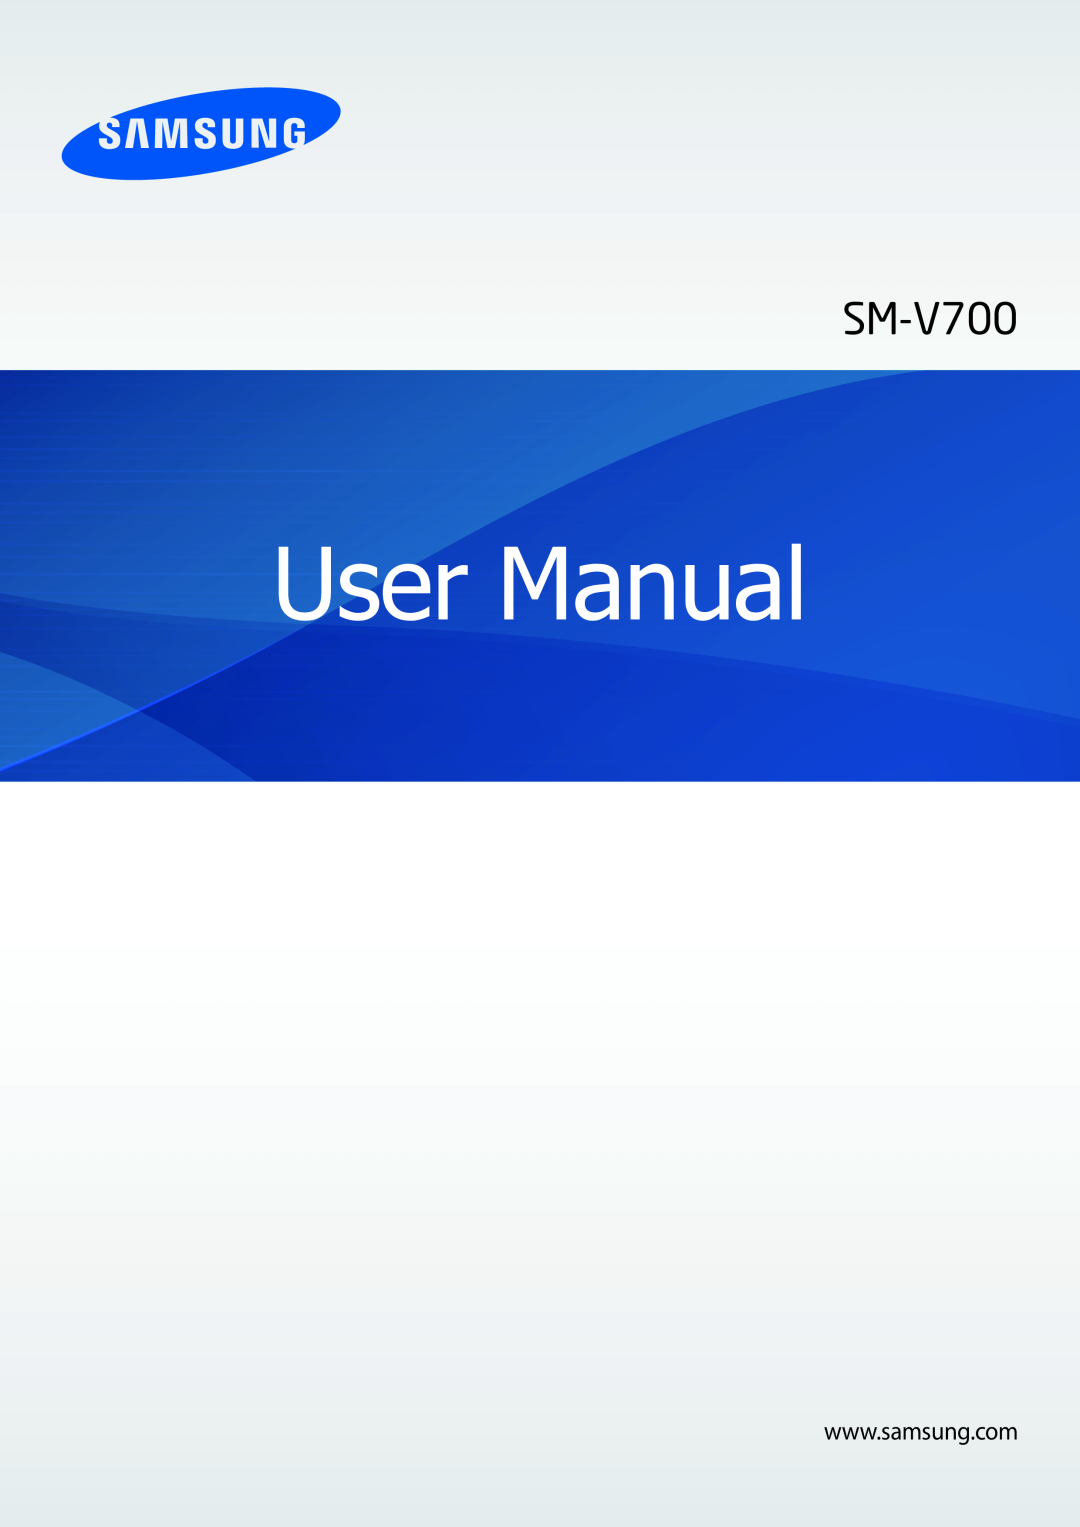 Samsung SM-V7000ZWADBT, SM-V7000ZOATUR, SM-V7000ZGADBT, SM-V7000ZKAXEO, SM-V7000ZKATUR manual Manuale dellutente 